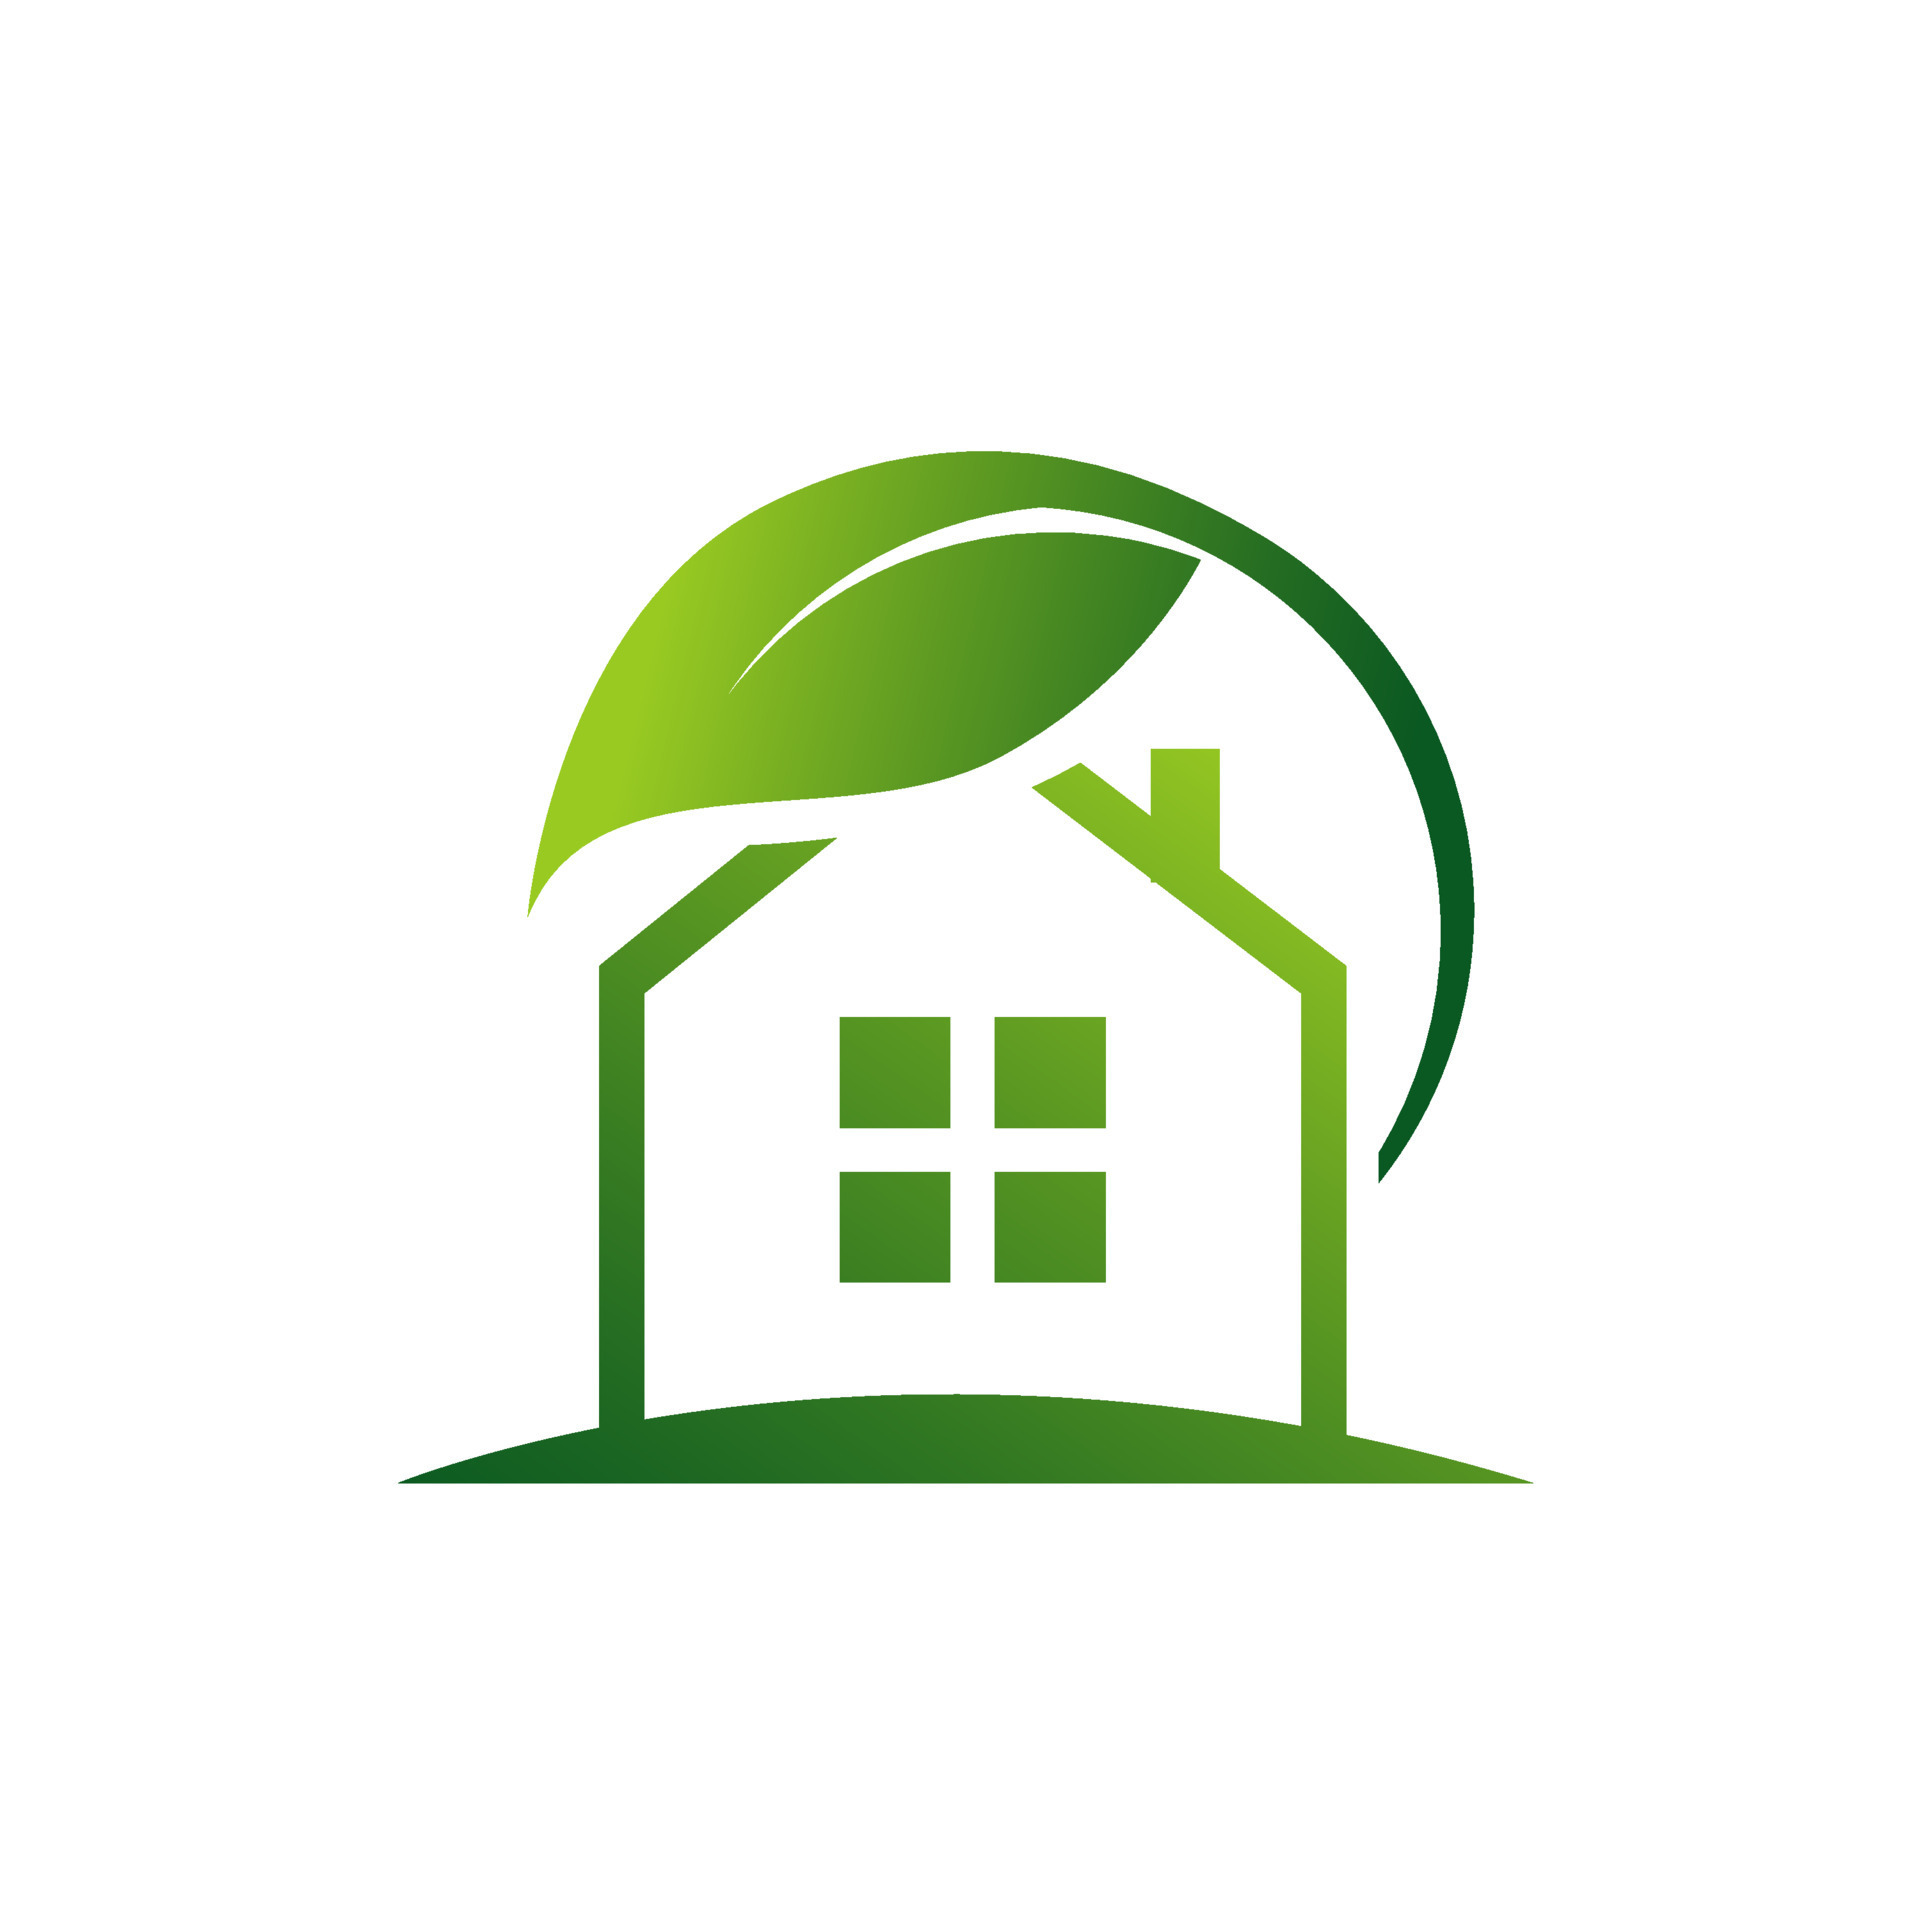 eco friendly green building logo vector illustrations 13899345 Vector ...